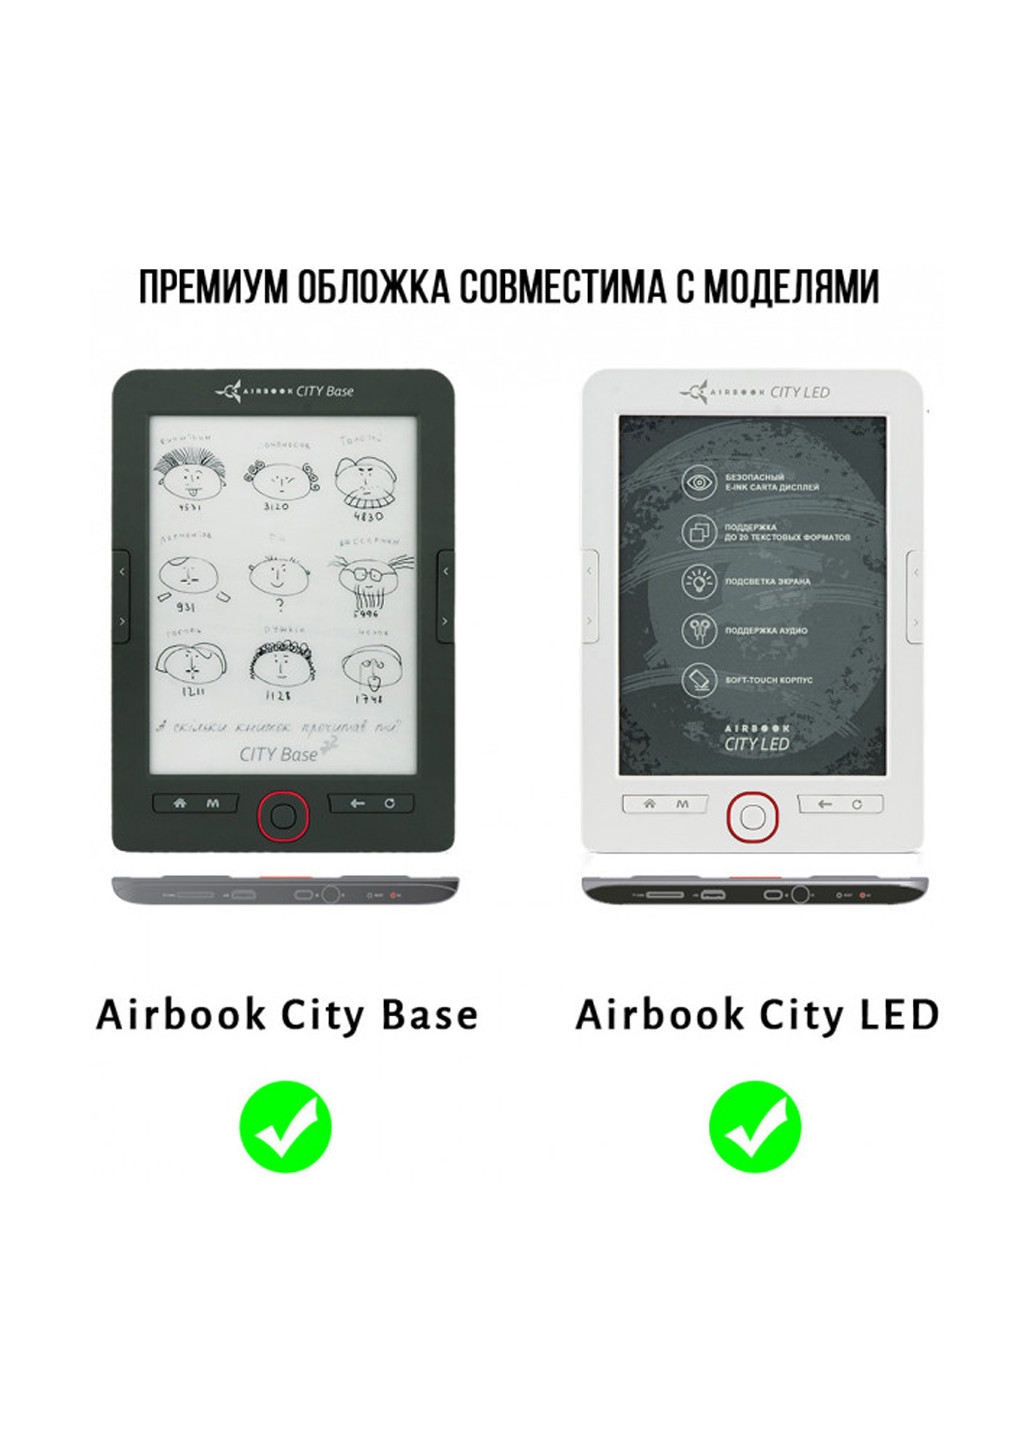 Чохол Premium для AIRBOOK City Base / LED black (4821784622005) Airon premium для электронной книги airbook city base/led black (4821784622005) (158554708)